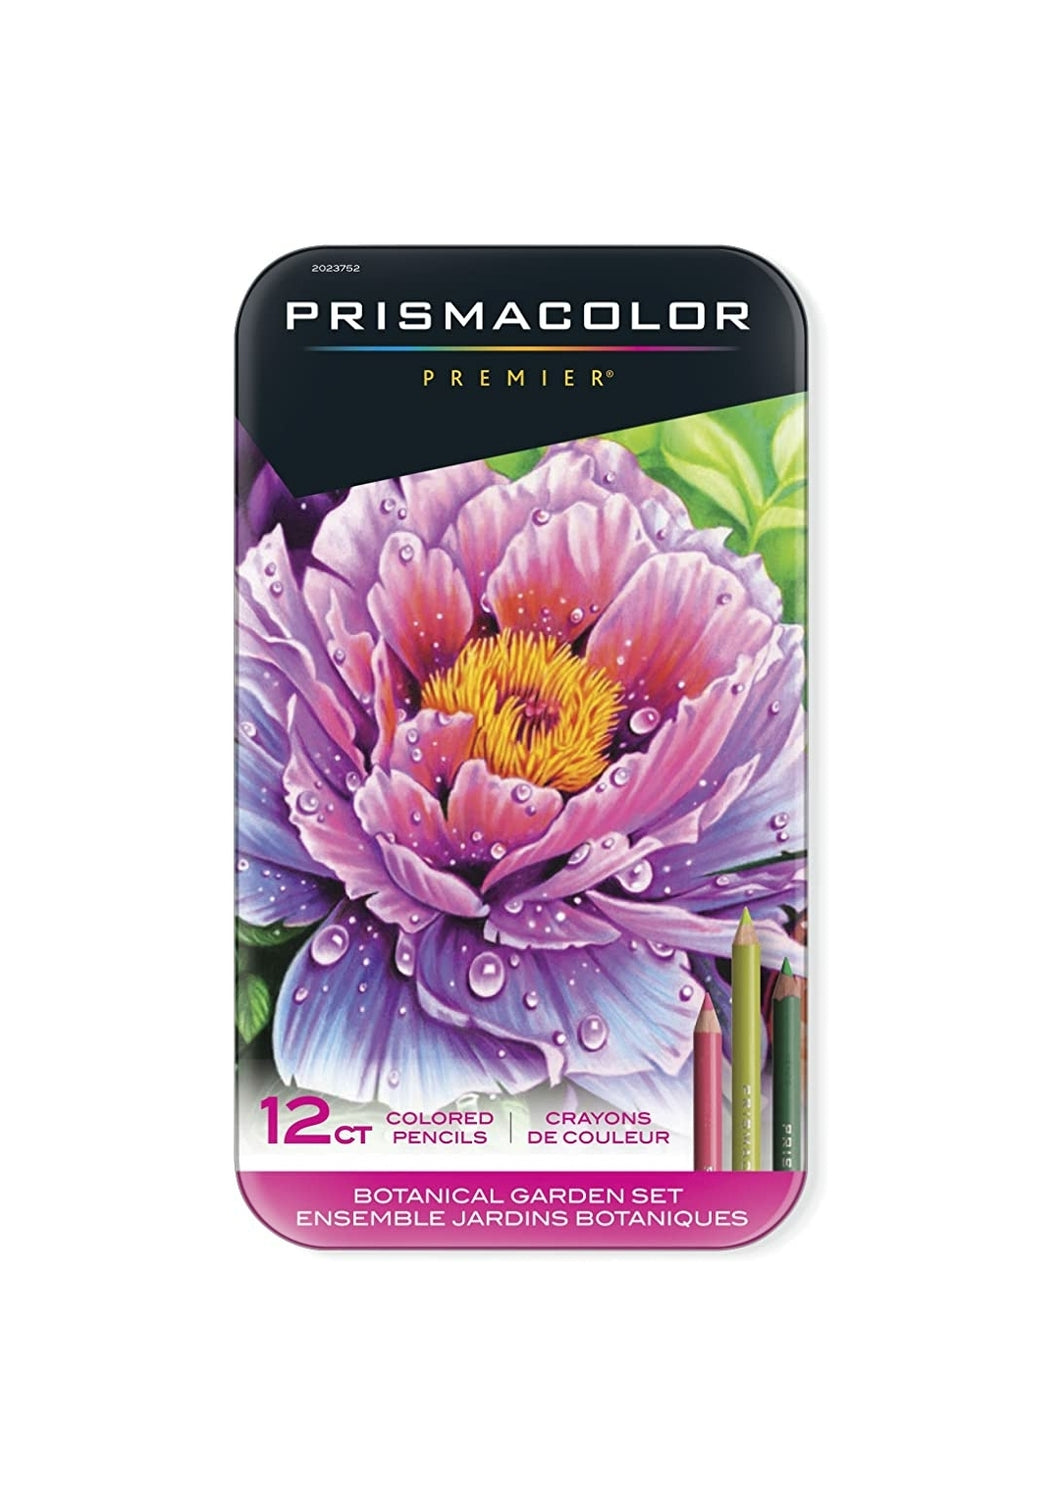 Prismacolor Premier / Botanical Garden Set 12ct